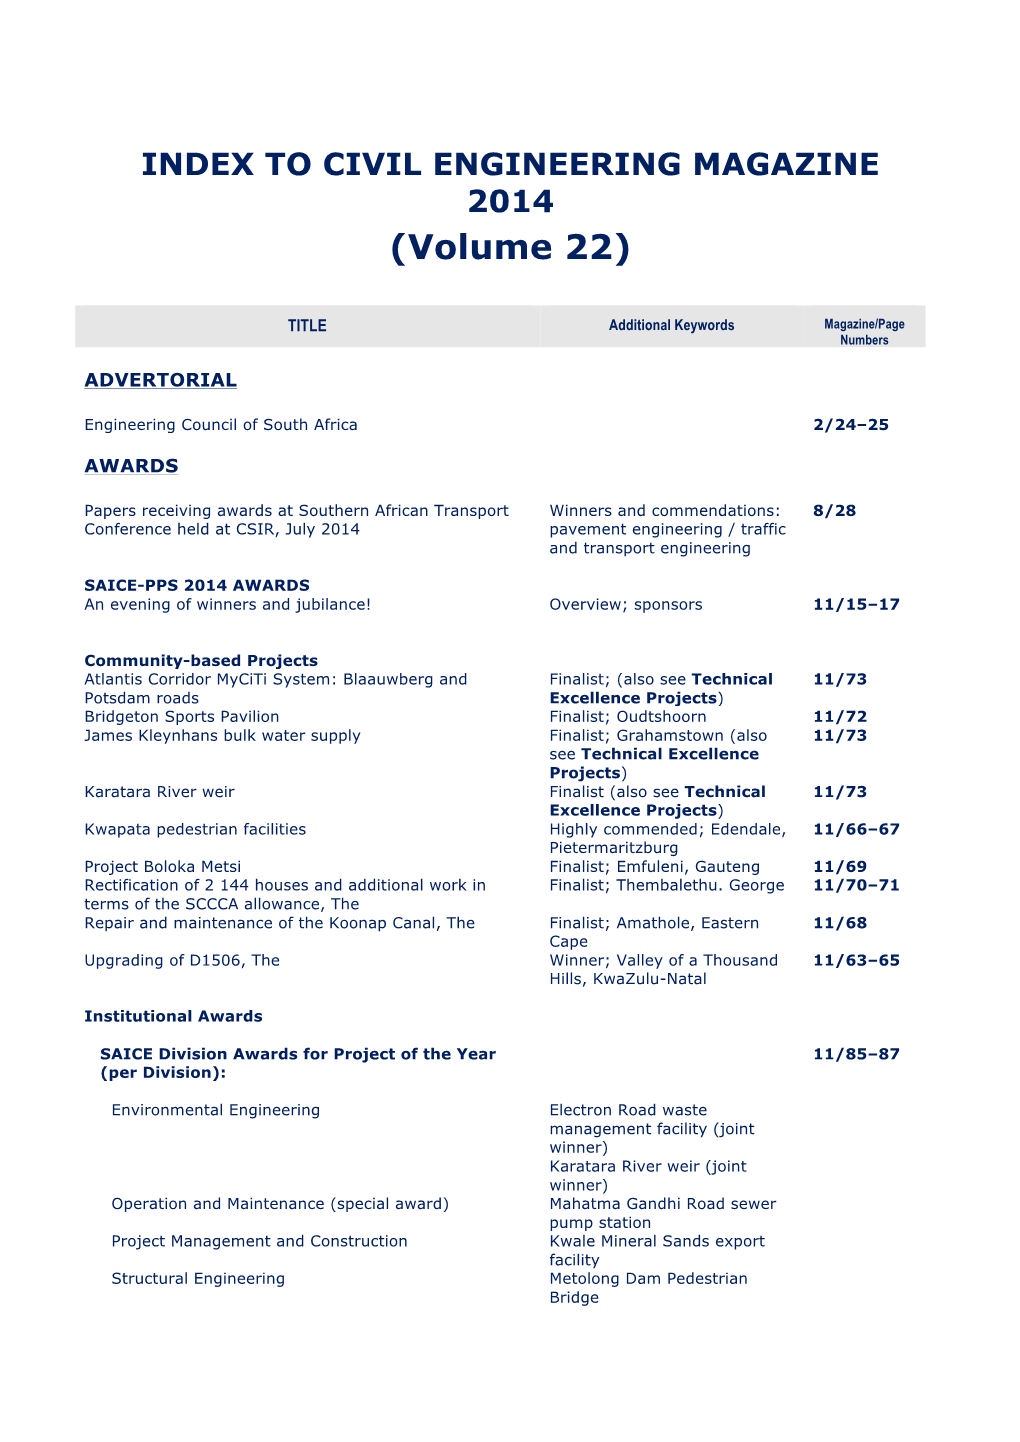 INDEX to CIVIL ENGINEERING MAGAZINE 2014 (Volume 22)